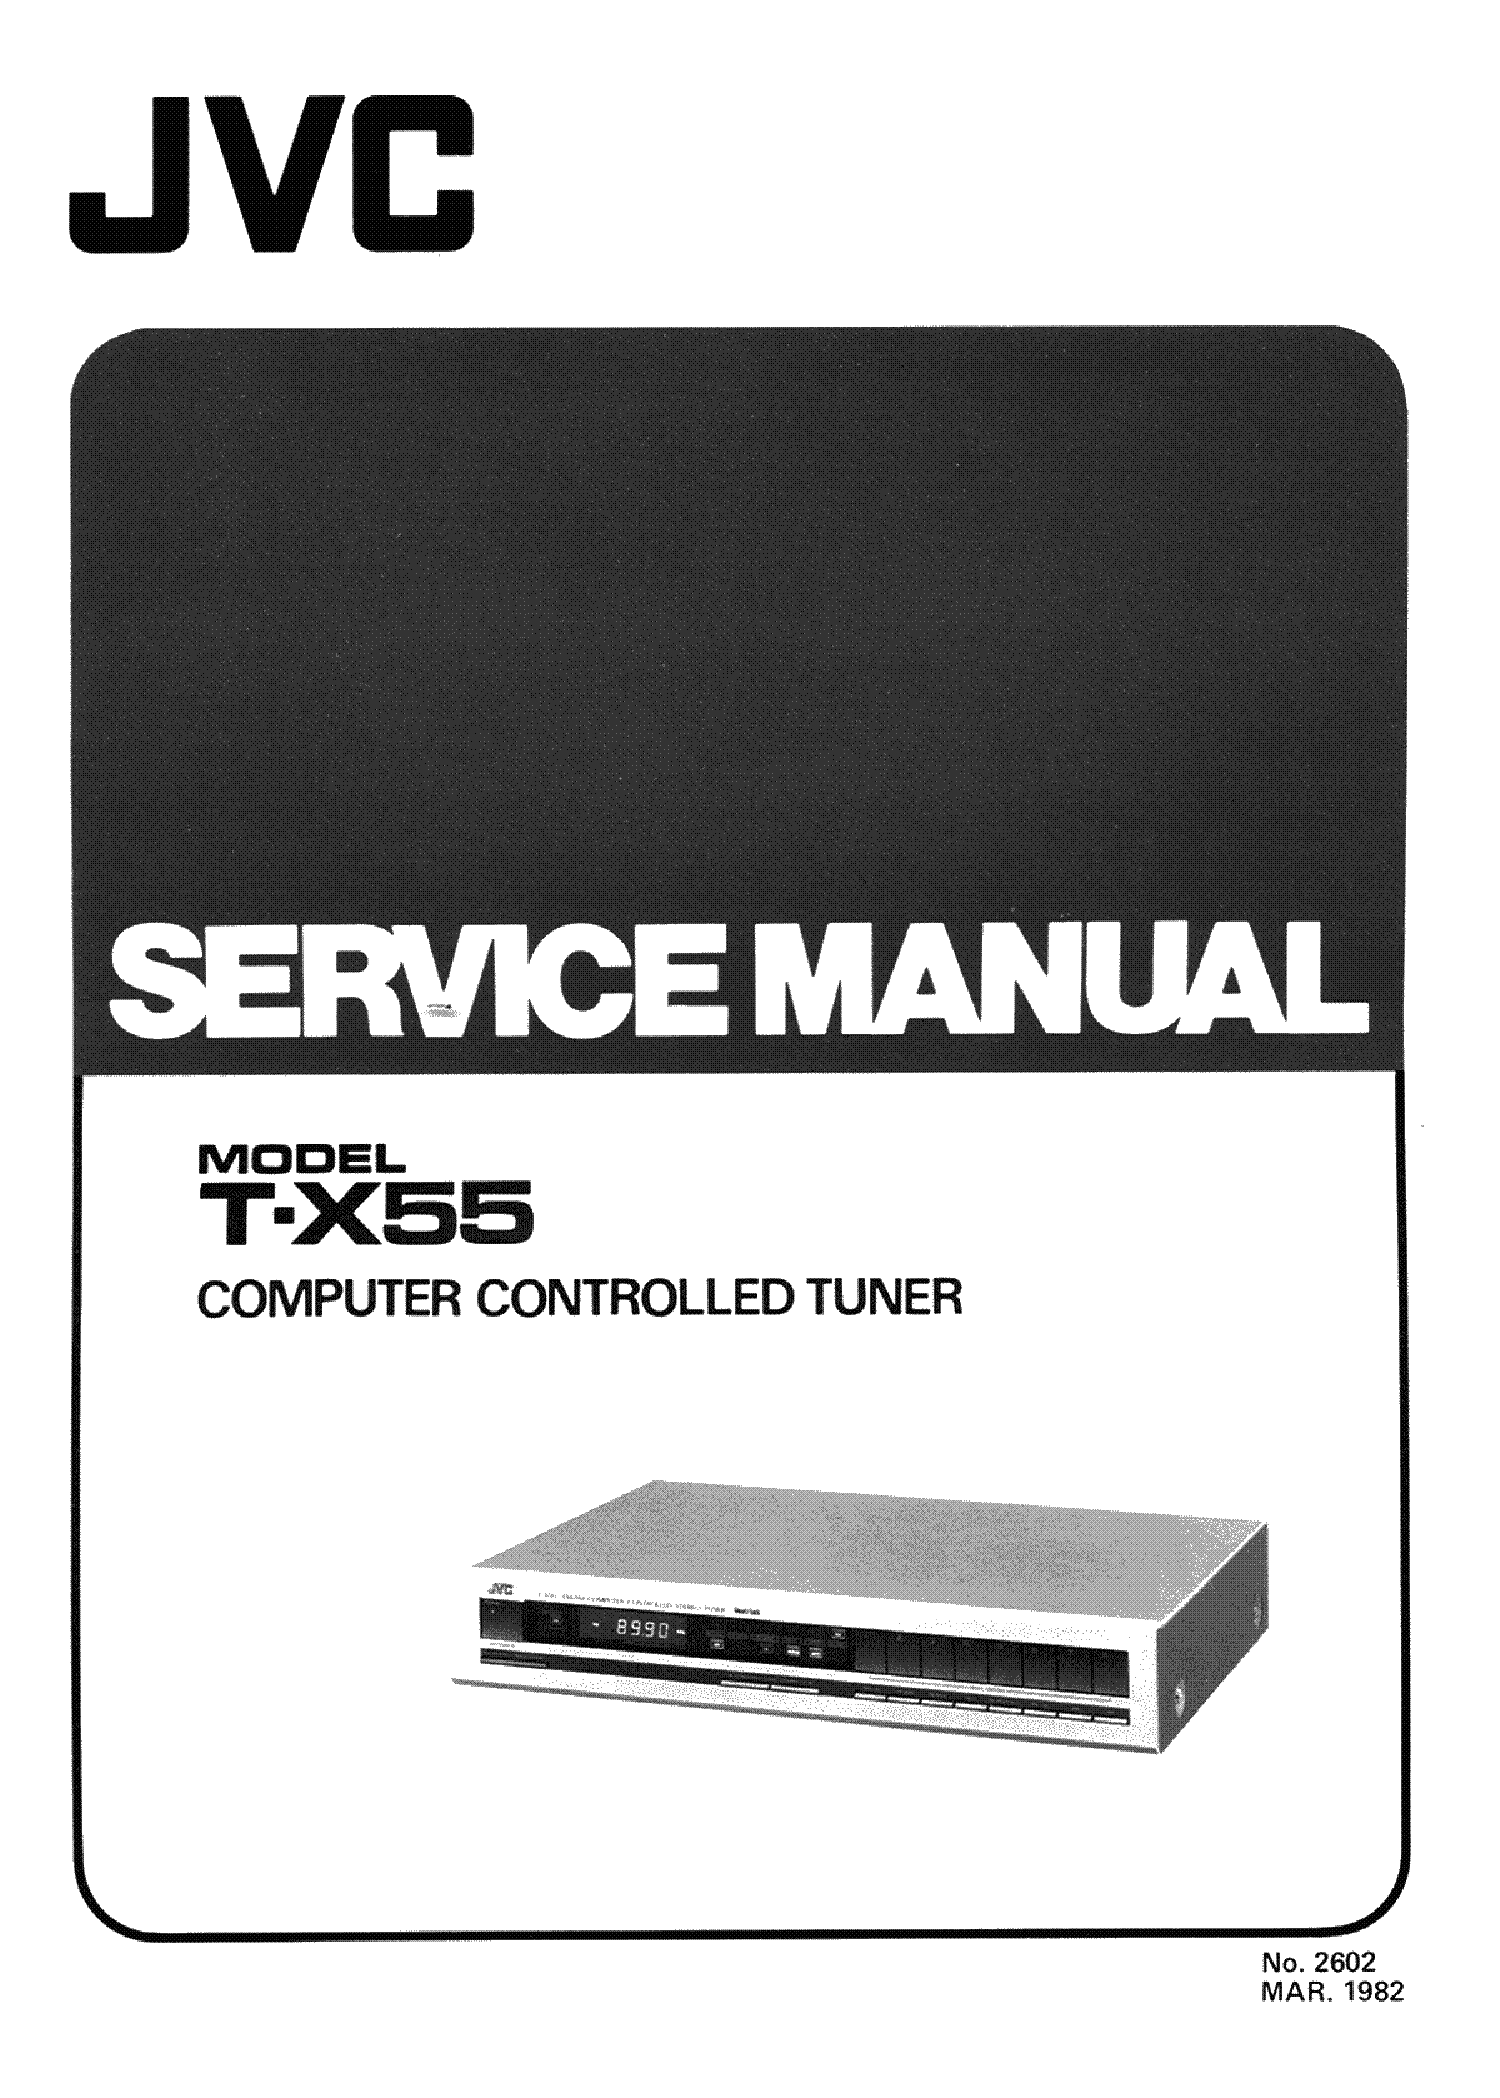 JVC T-X55 service manual (2nd page)